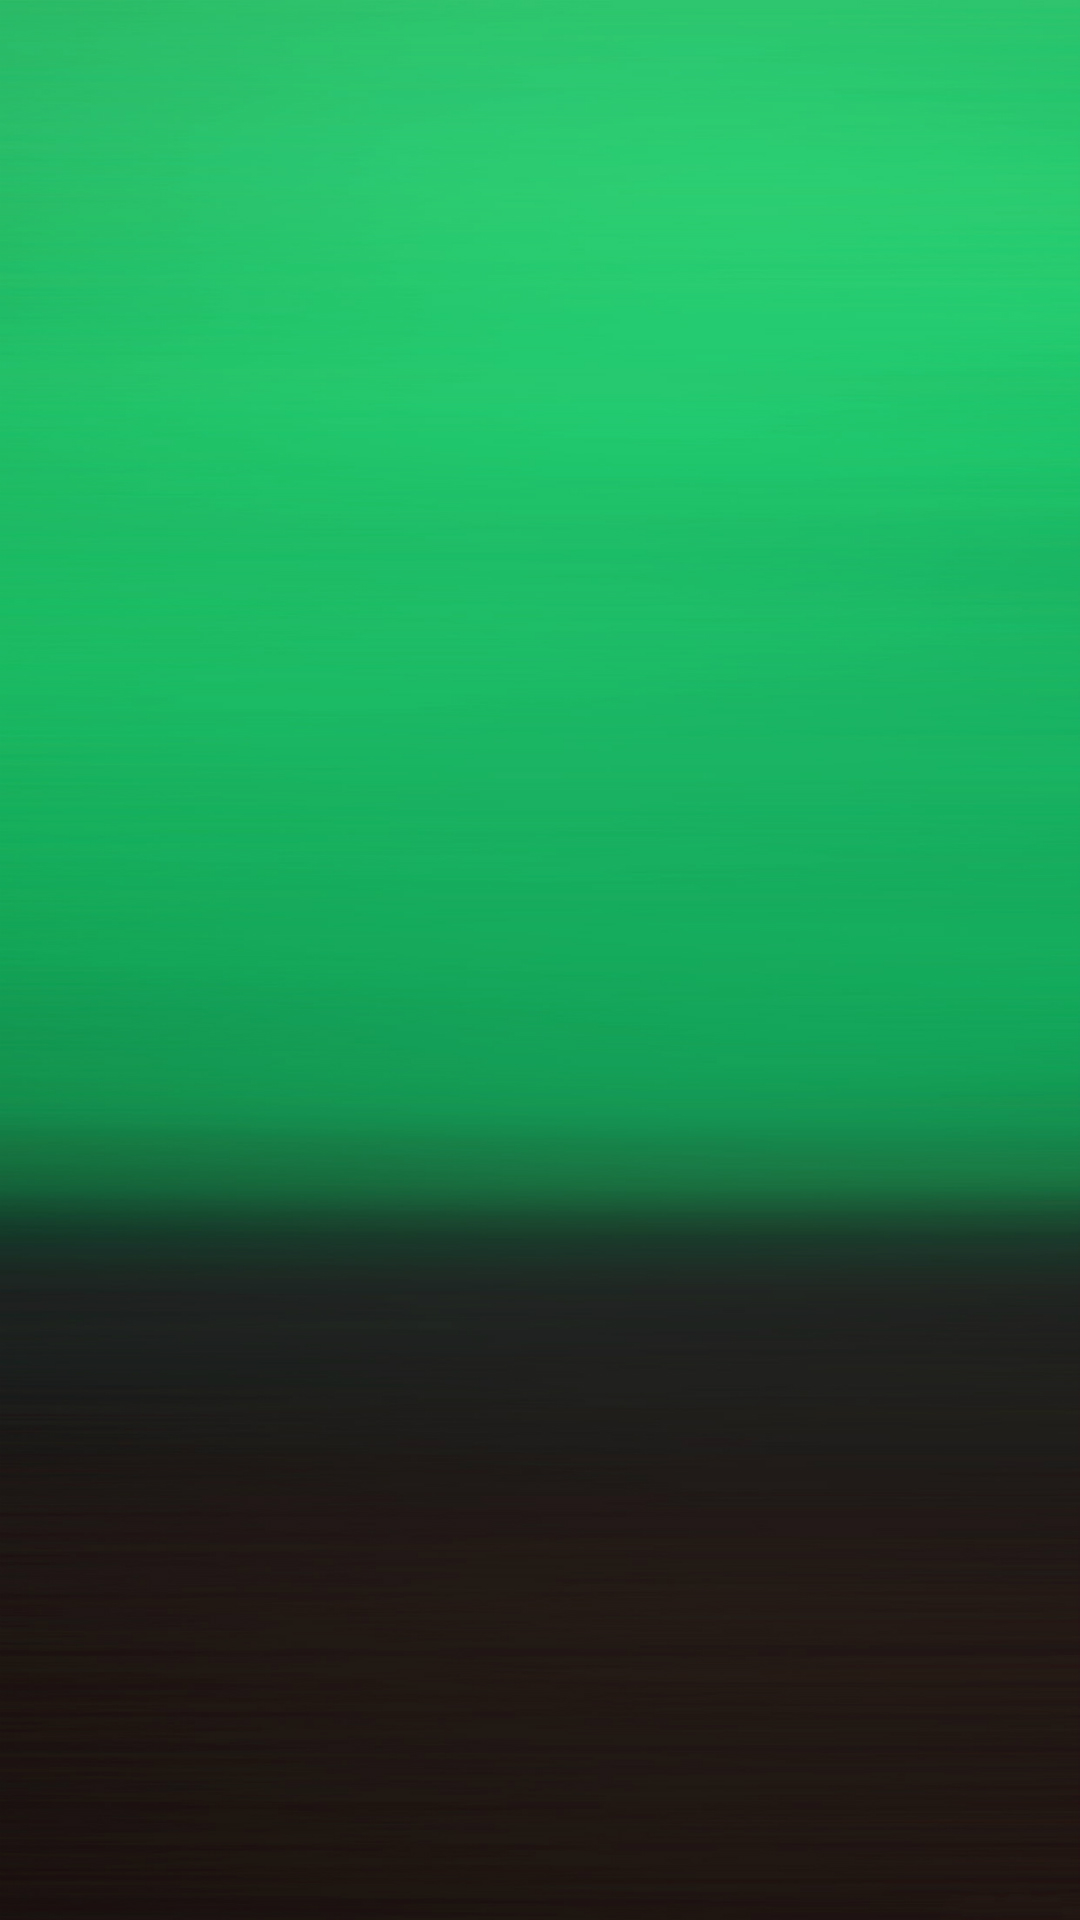 Motion Green Dark Gradation Blur iPhone Wallpaper